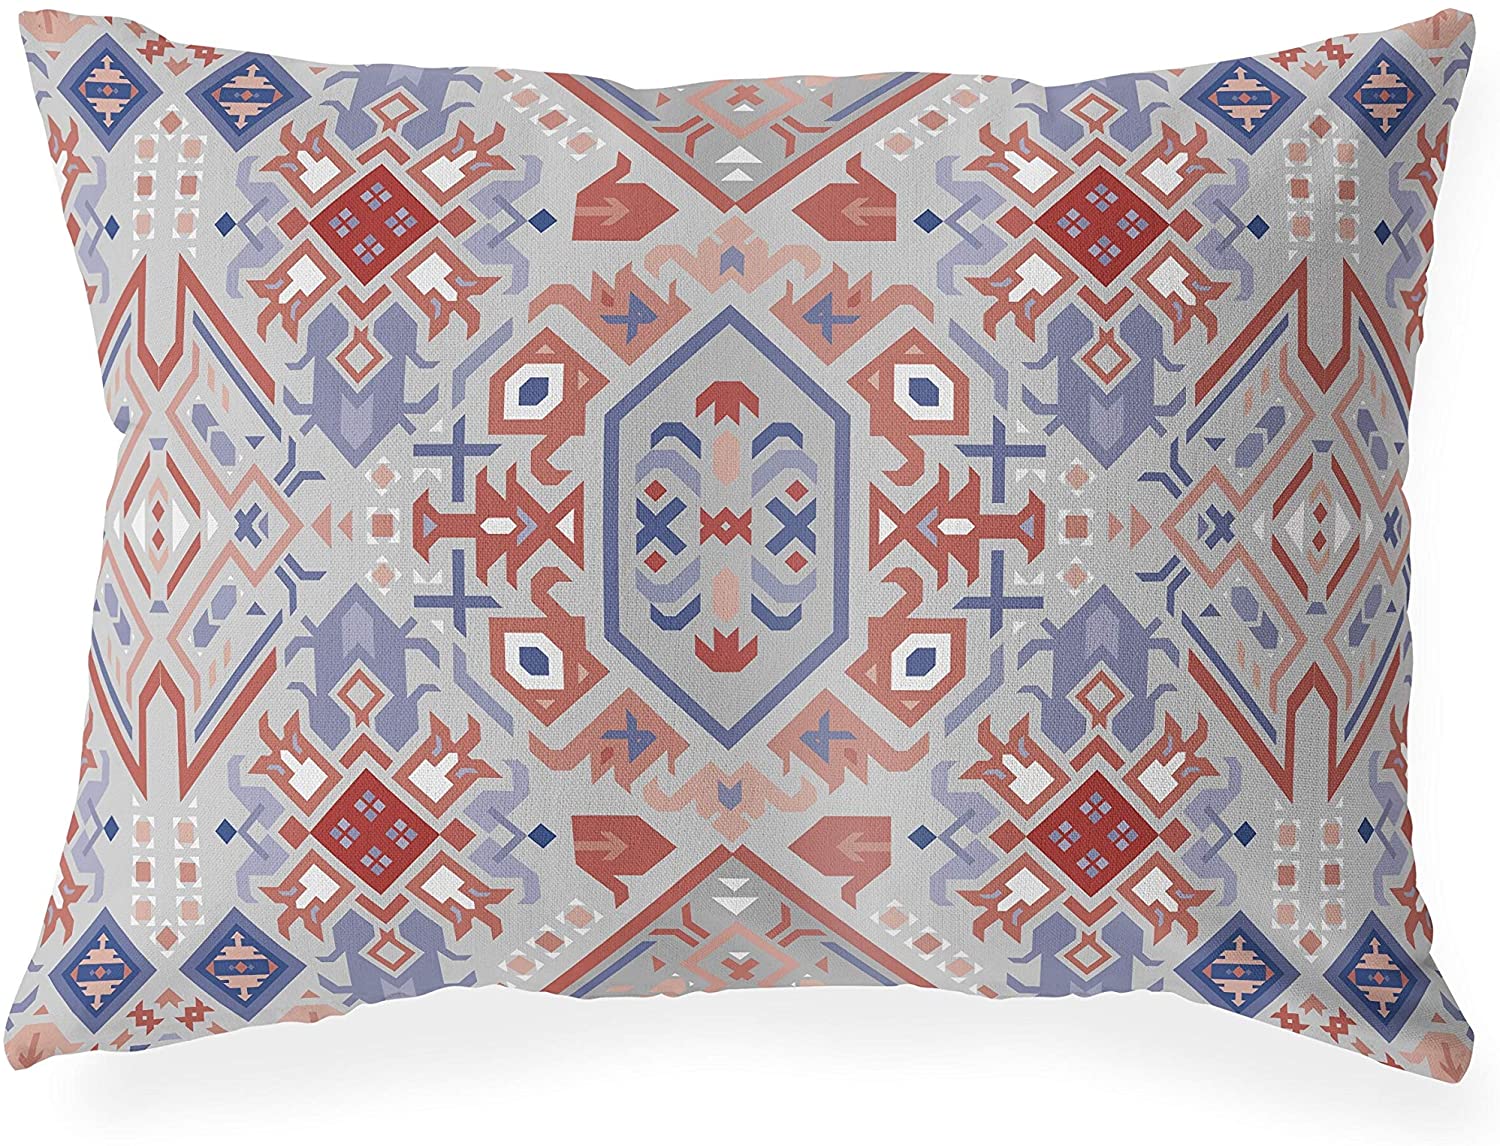 UKN Grey Lumbar Pillow Grey Geometric Southwestern Polyester Single Removable Cover